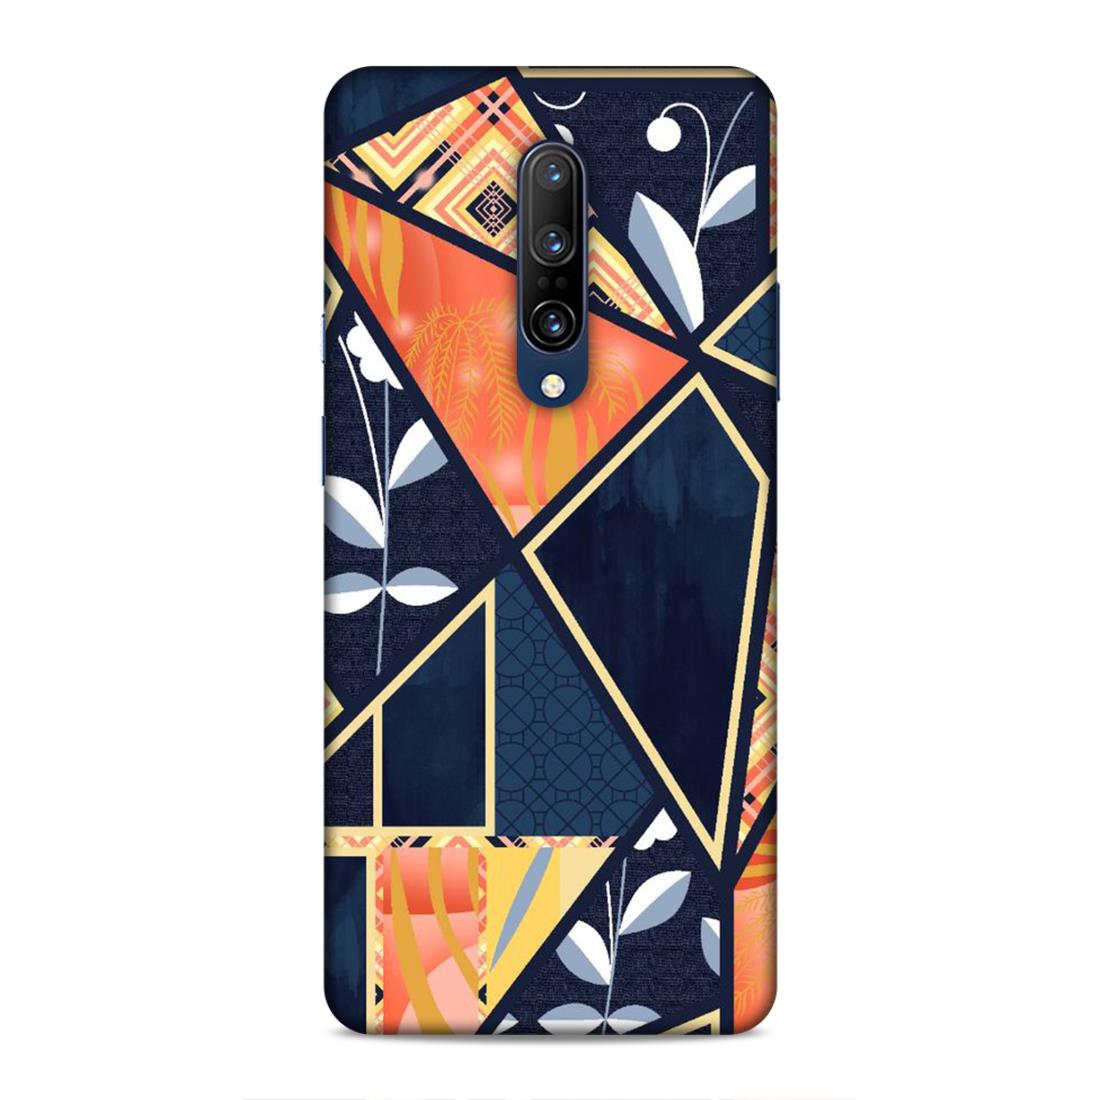 Floral Textile Pattern Hard Back Case For OnePlus 7 Pro